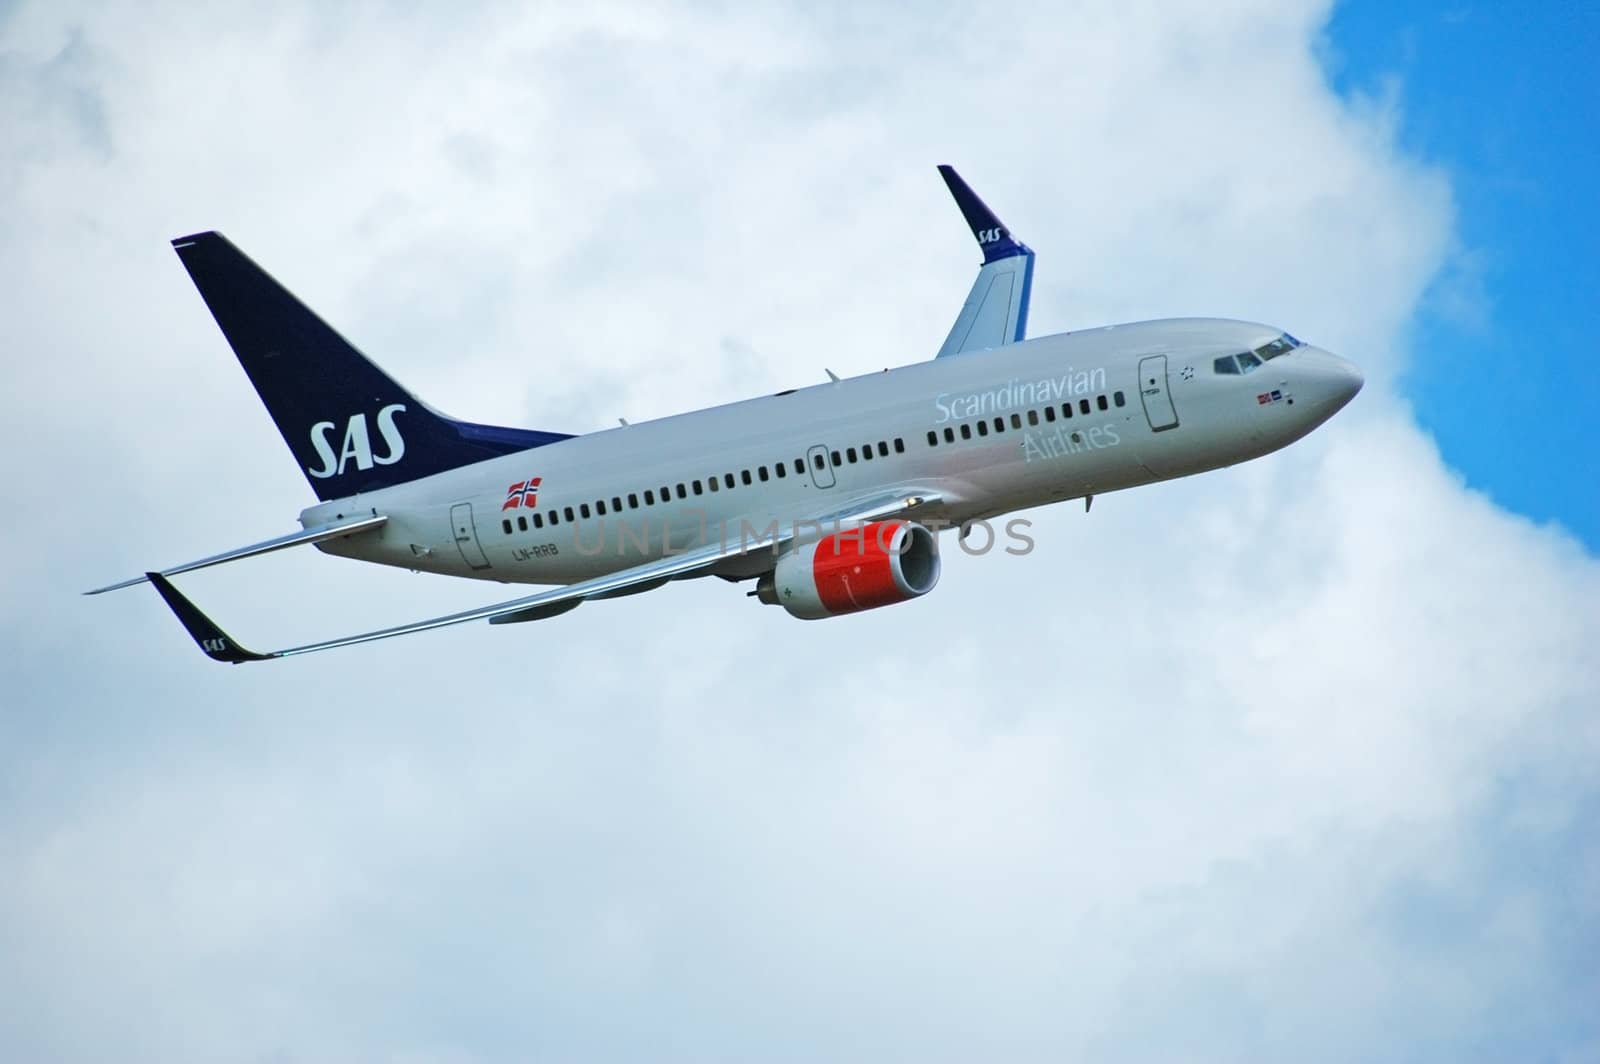 SAS / Scandinavian Airlines. LN-RRB. Norway 2007.